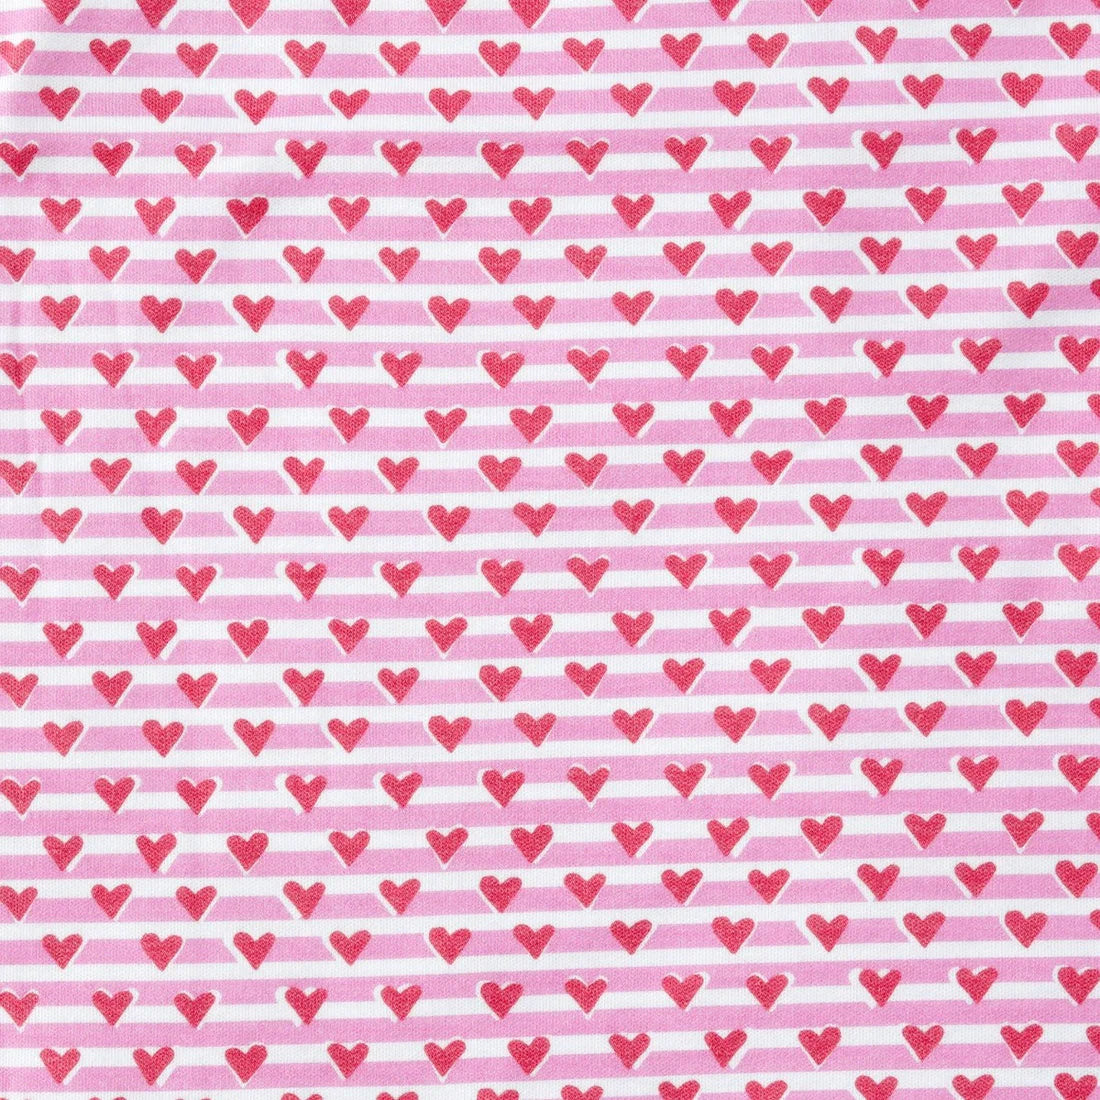 Joy Street Sailor Hearts Two Piece Pajamas in Pink